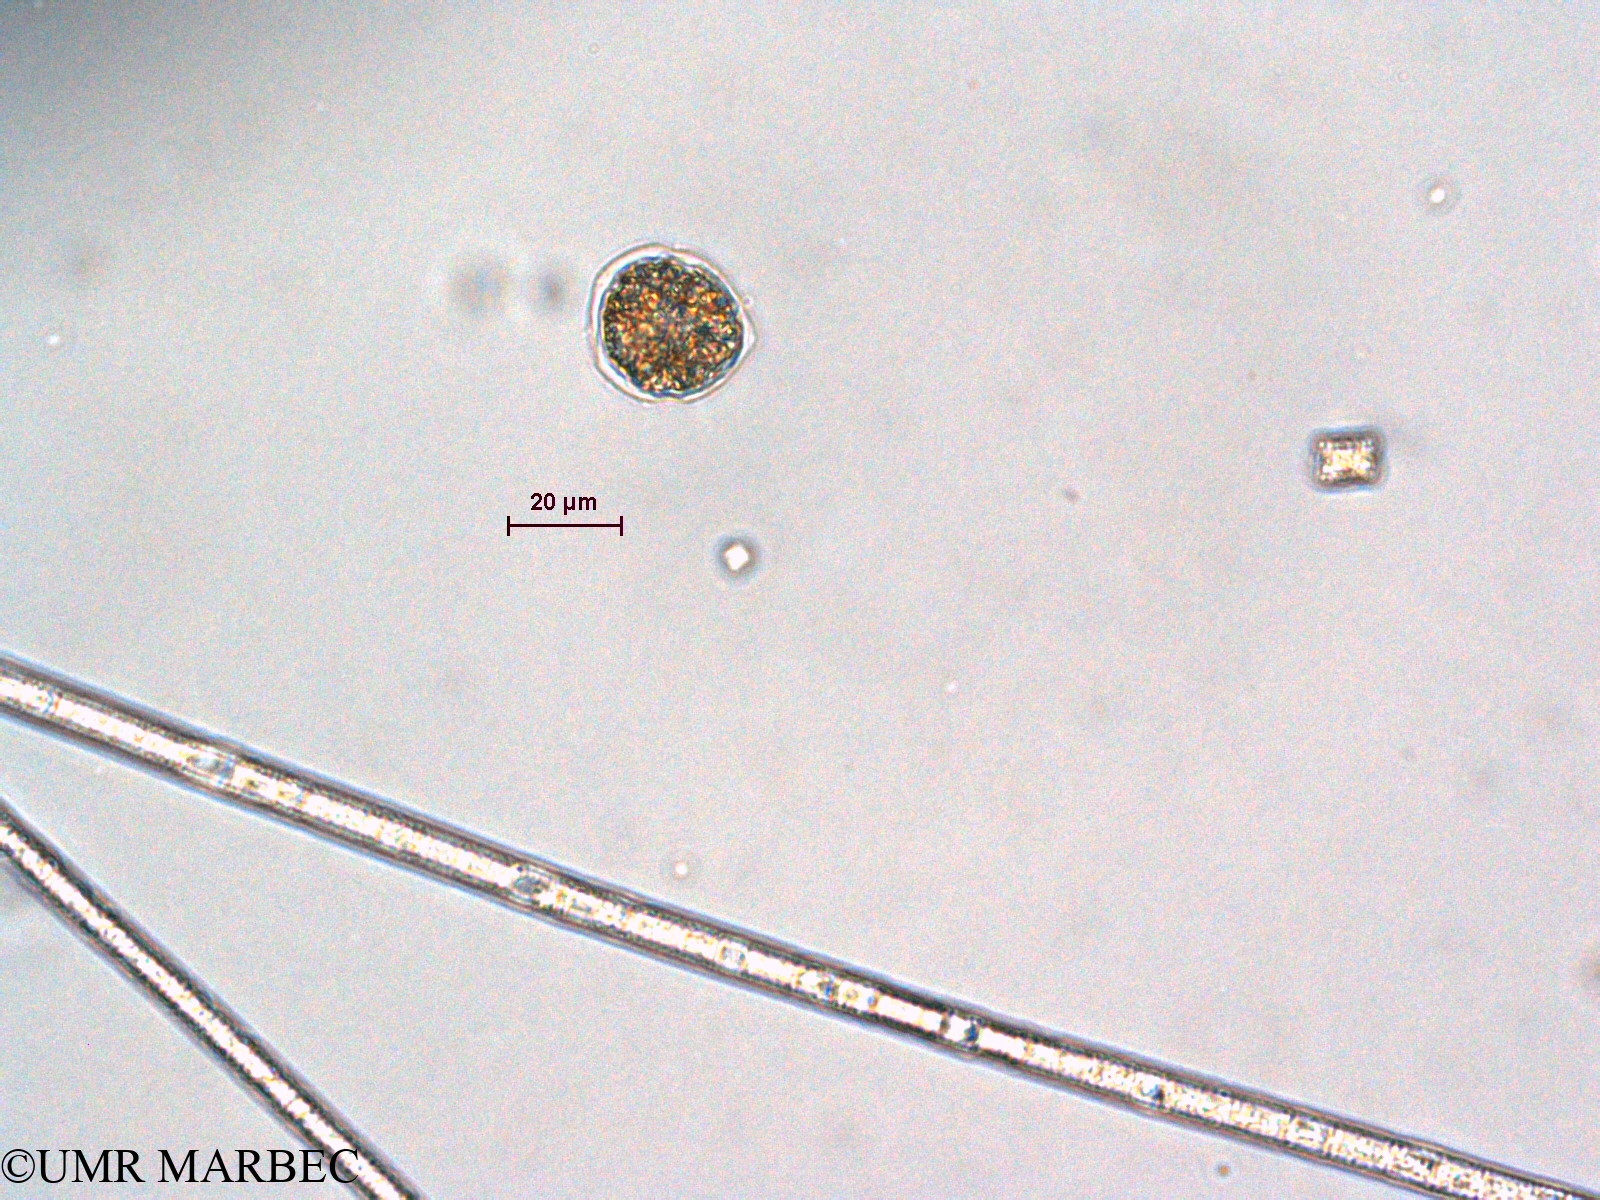 phyto/Scattered_Islands/all/COMMA April 2011/Scrippsiella spp  (ancien Dino g cf protoperidinium)(copy).jpg